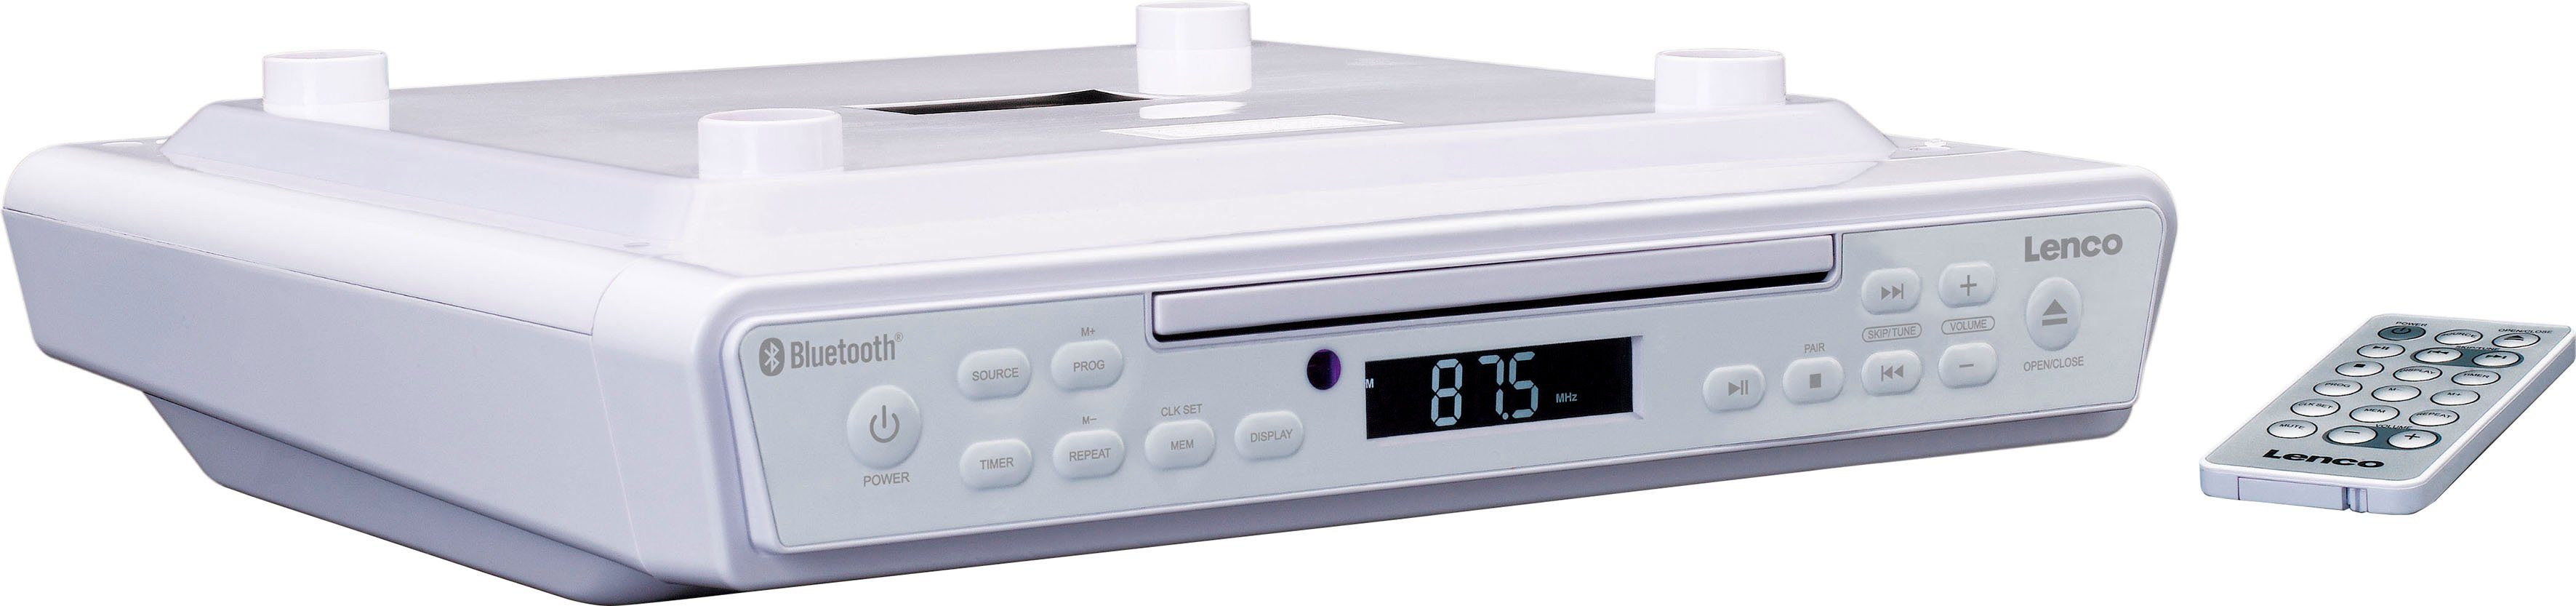 Lenco KCR-150 (FM-Tuner, 6 W) Küchen-Radio